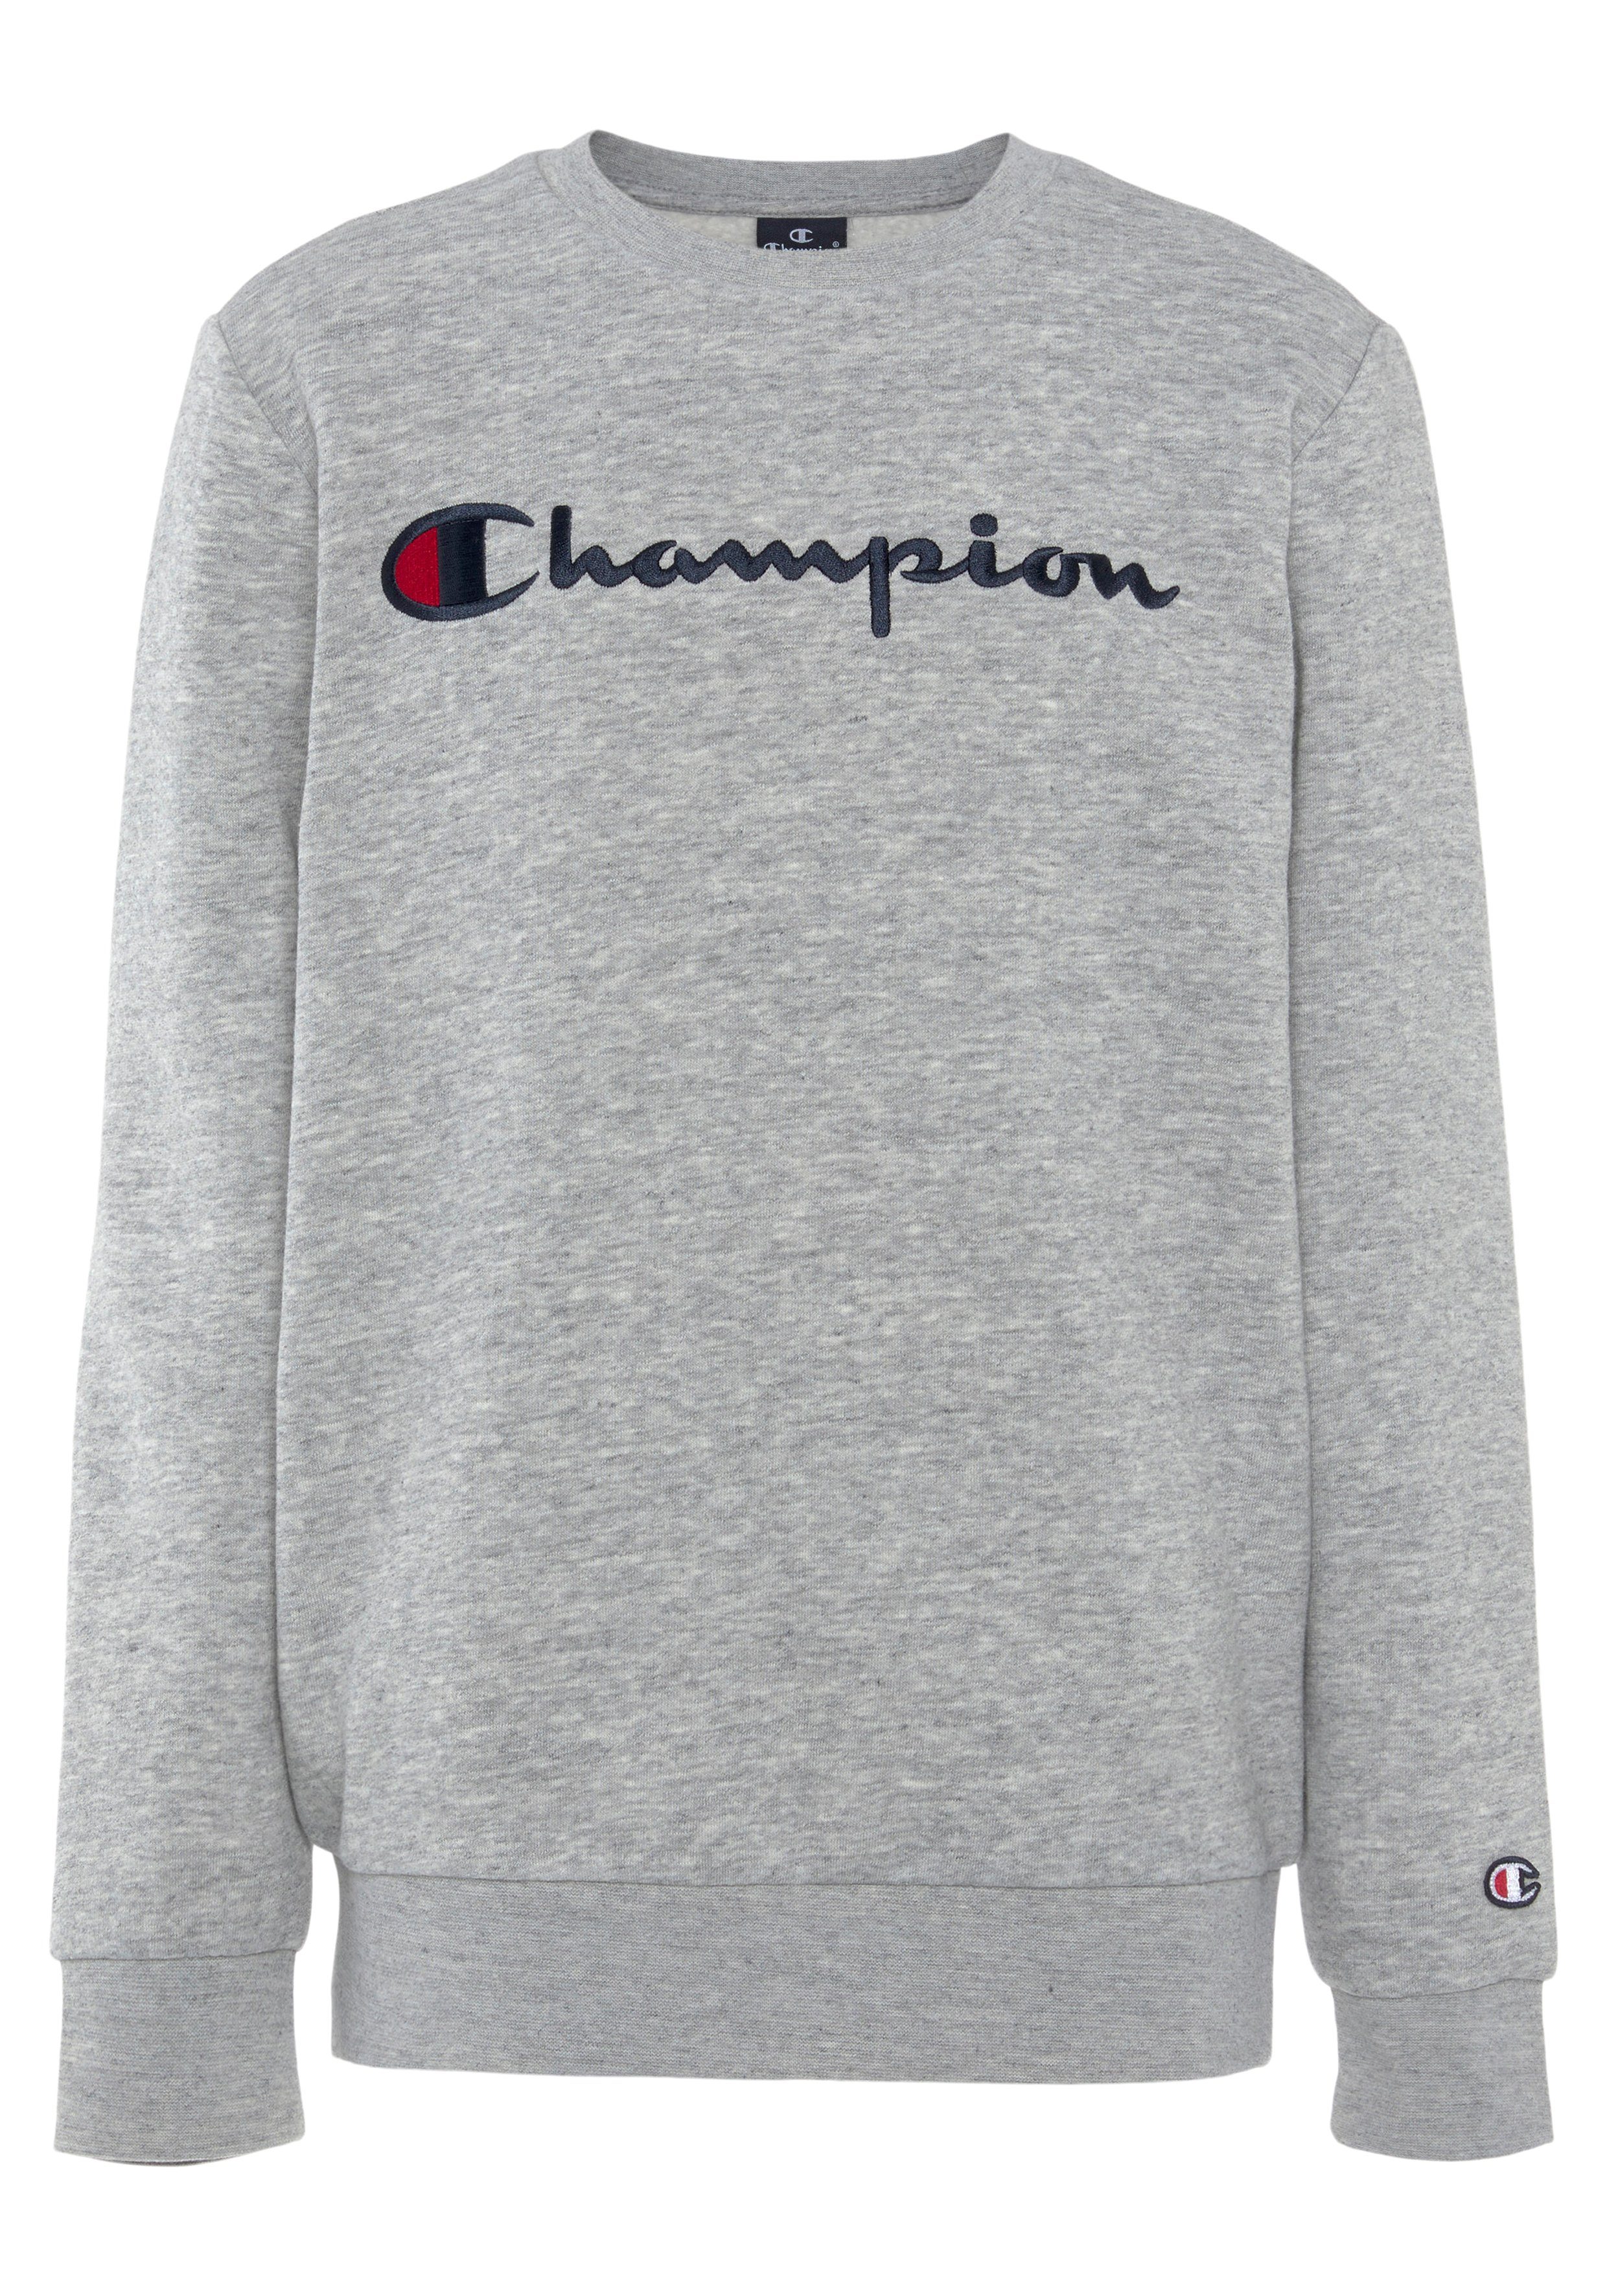 Kinder Classic Logo large Champion Sweatshirt hellgrau mel Crewneck - Sweatshirt für